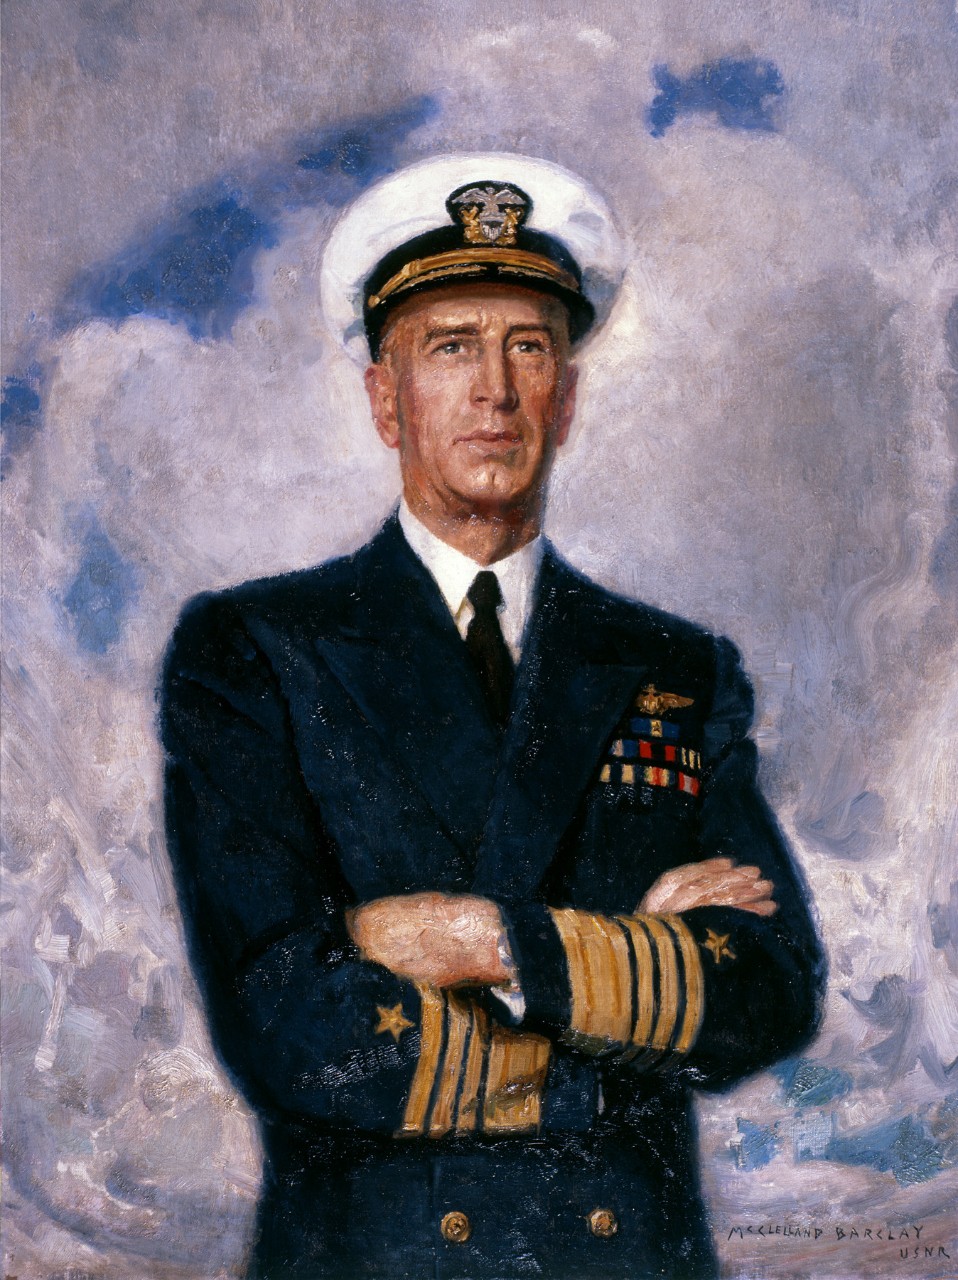 Portrait of Admiral King in dress blue uniform